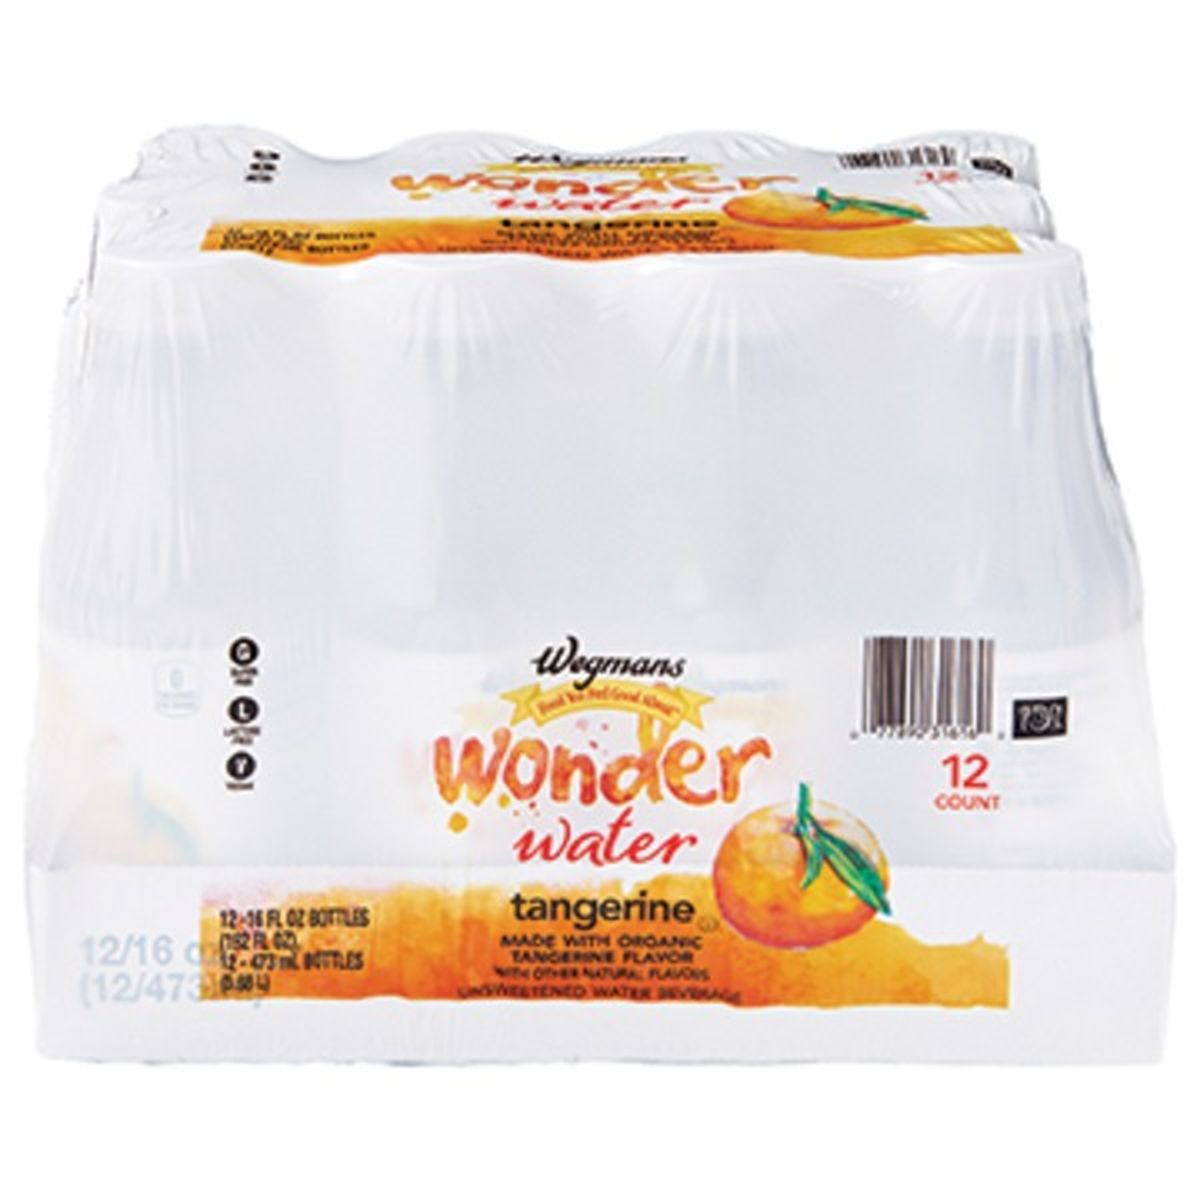 Calories in Wegmans Wonder Water Tangerine, 12 Pack